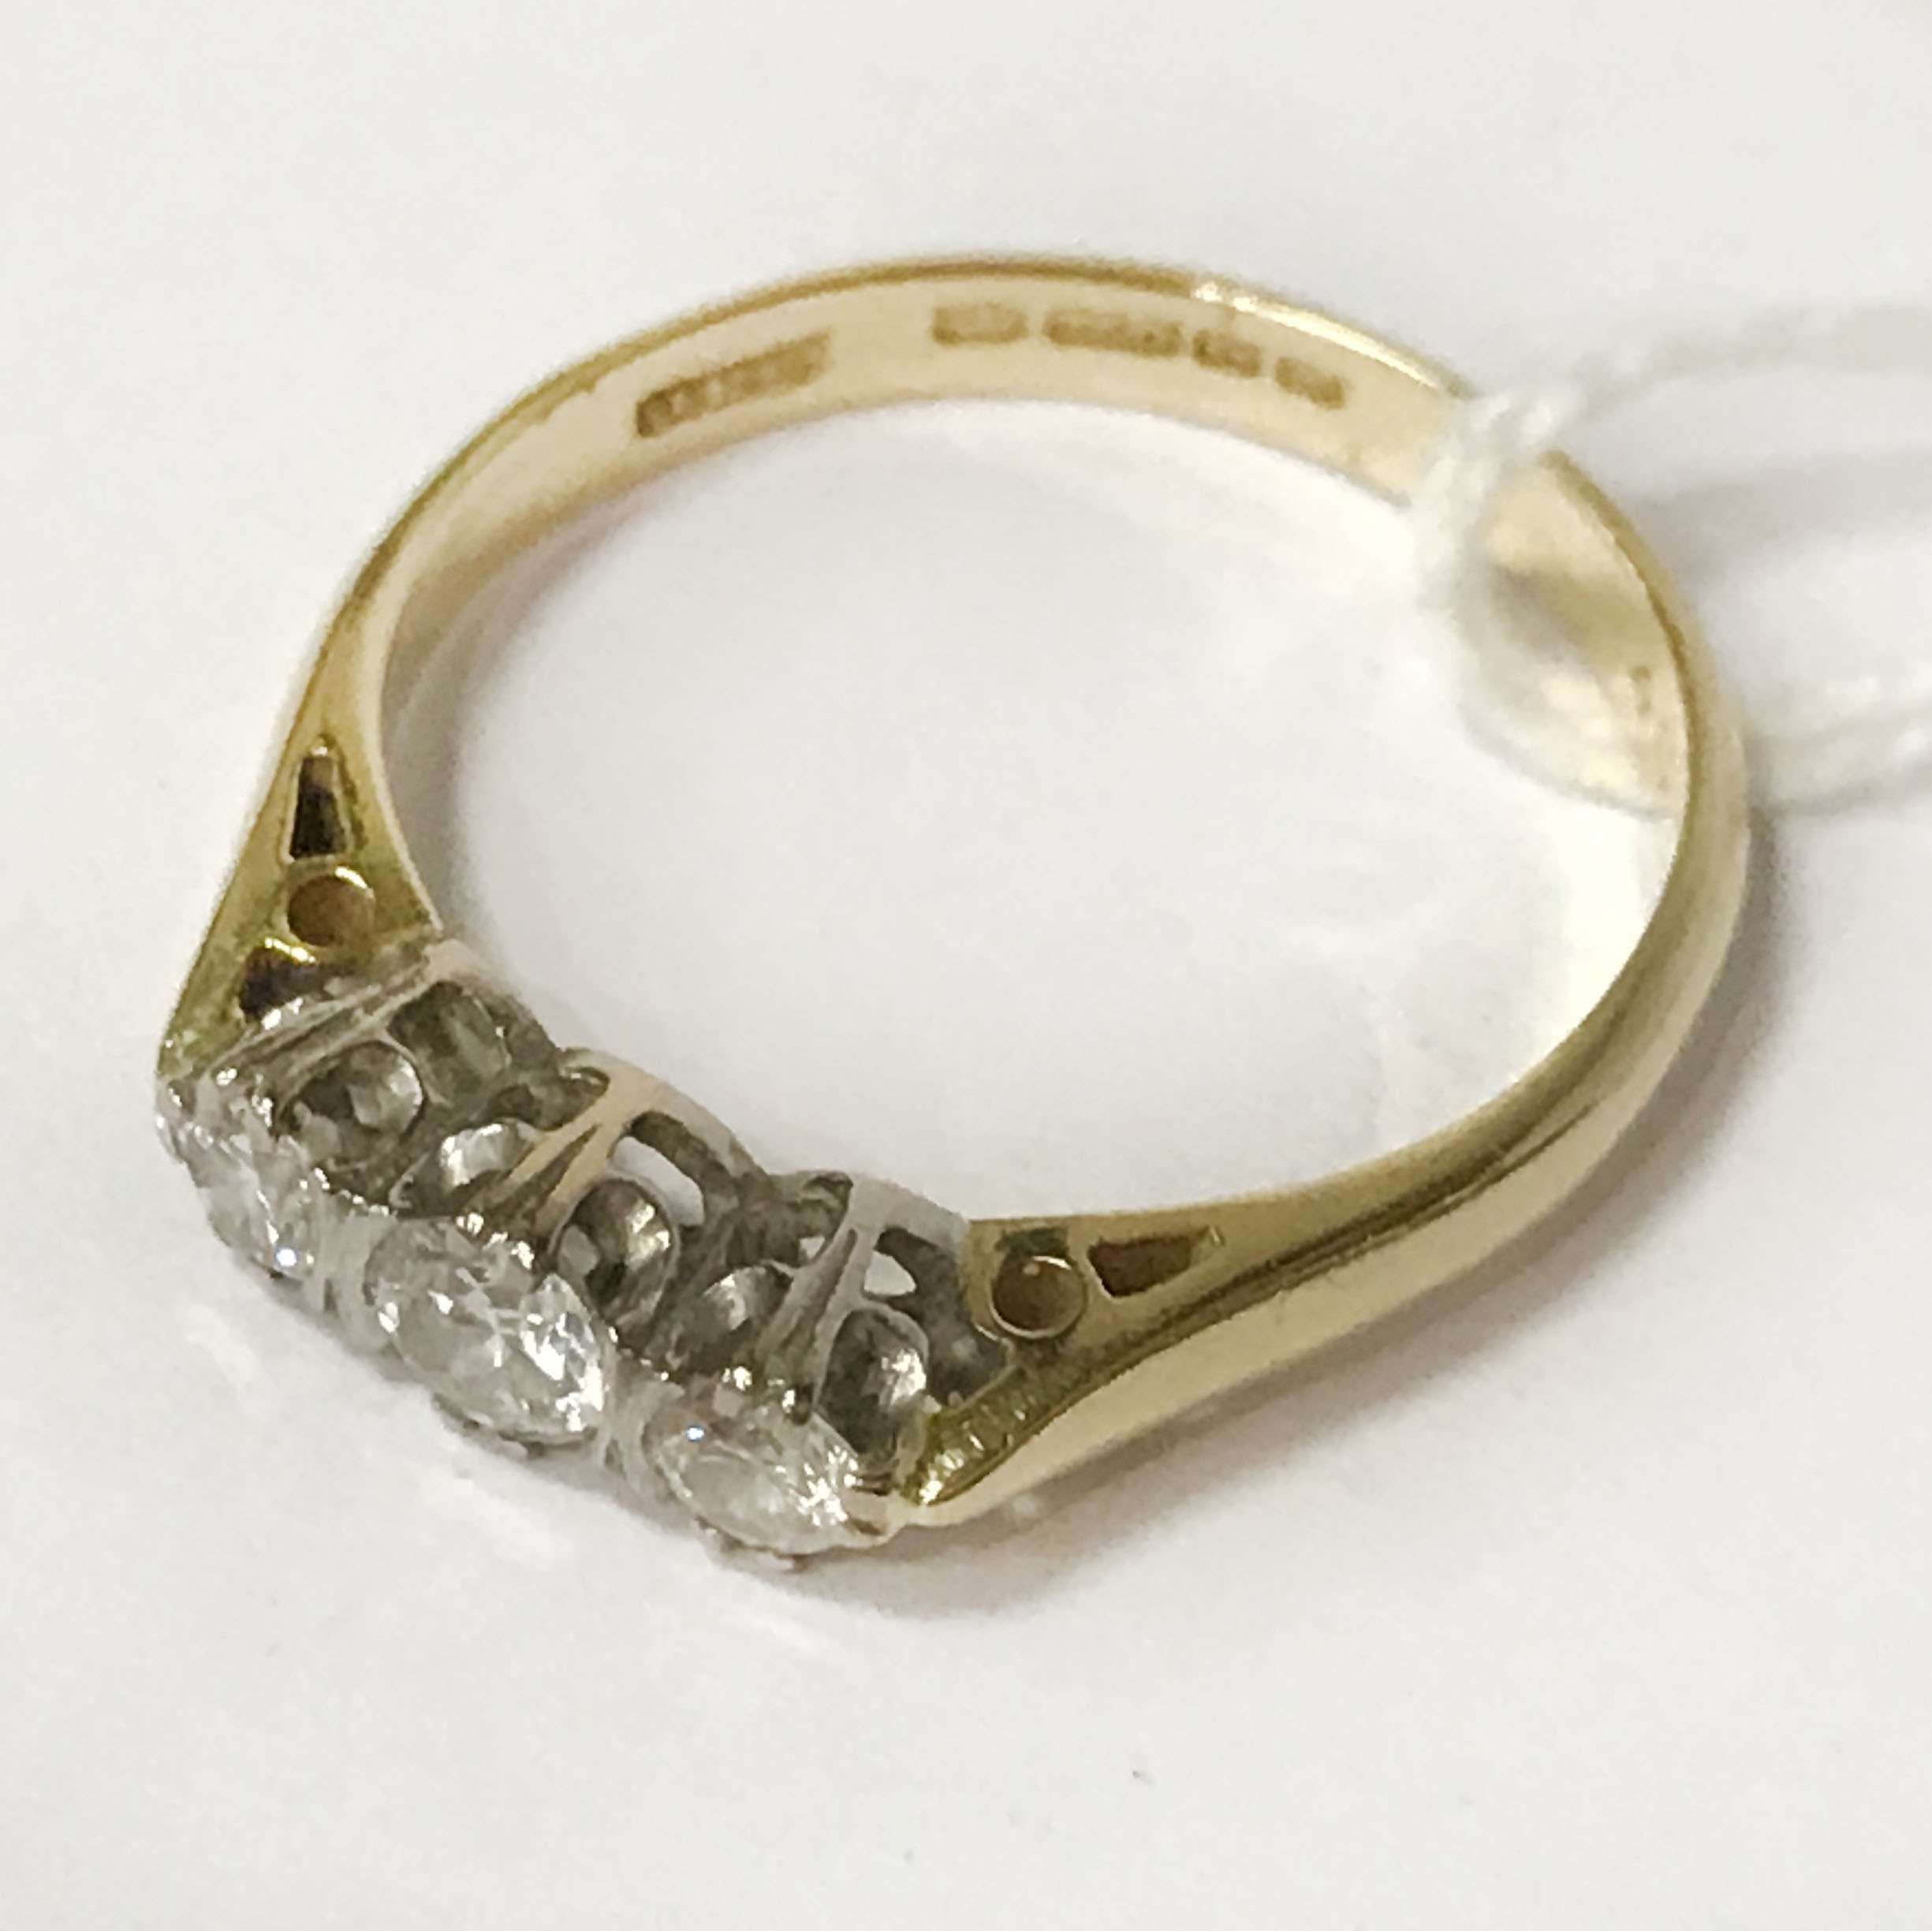 18CT GOLD DIAMOND TRILOGY RING - RING SIZE 'M' - Image 2 of 2